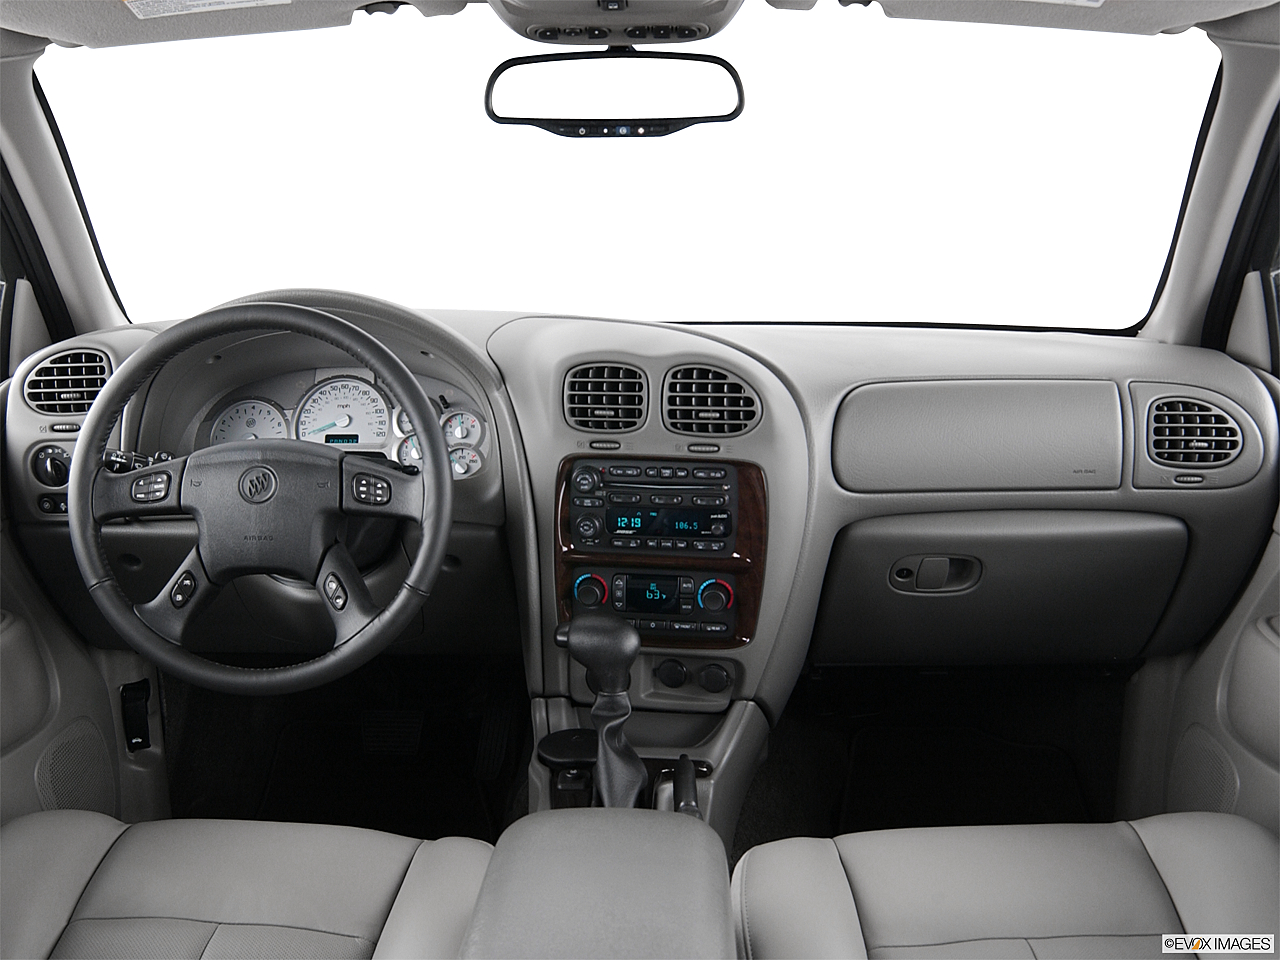 2005 Buick Rainier CXL 4dr SUV - Research - GrooveCar